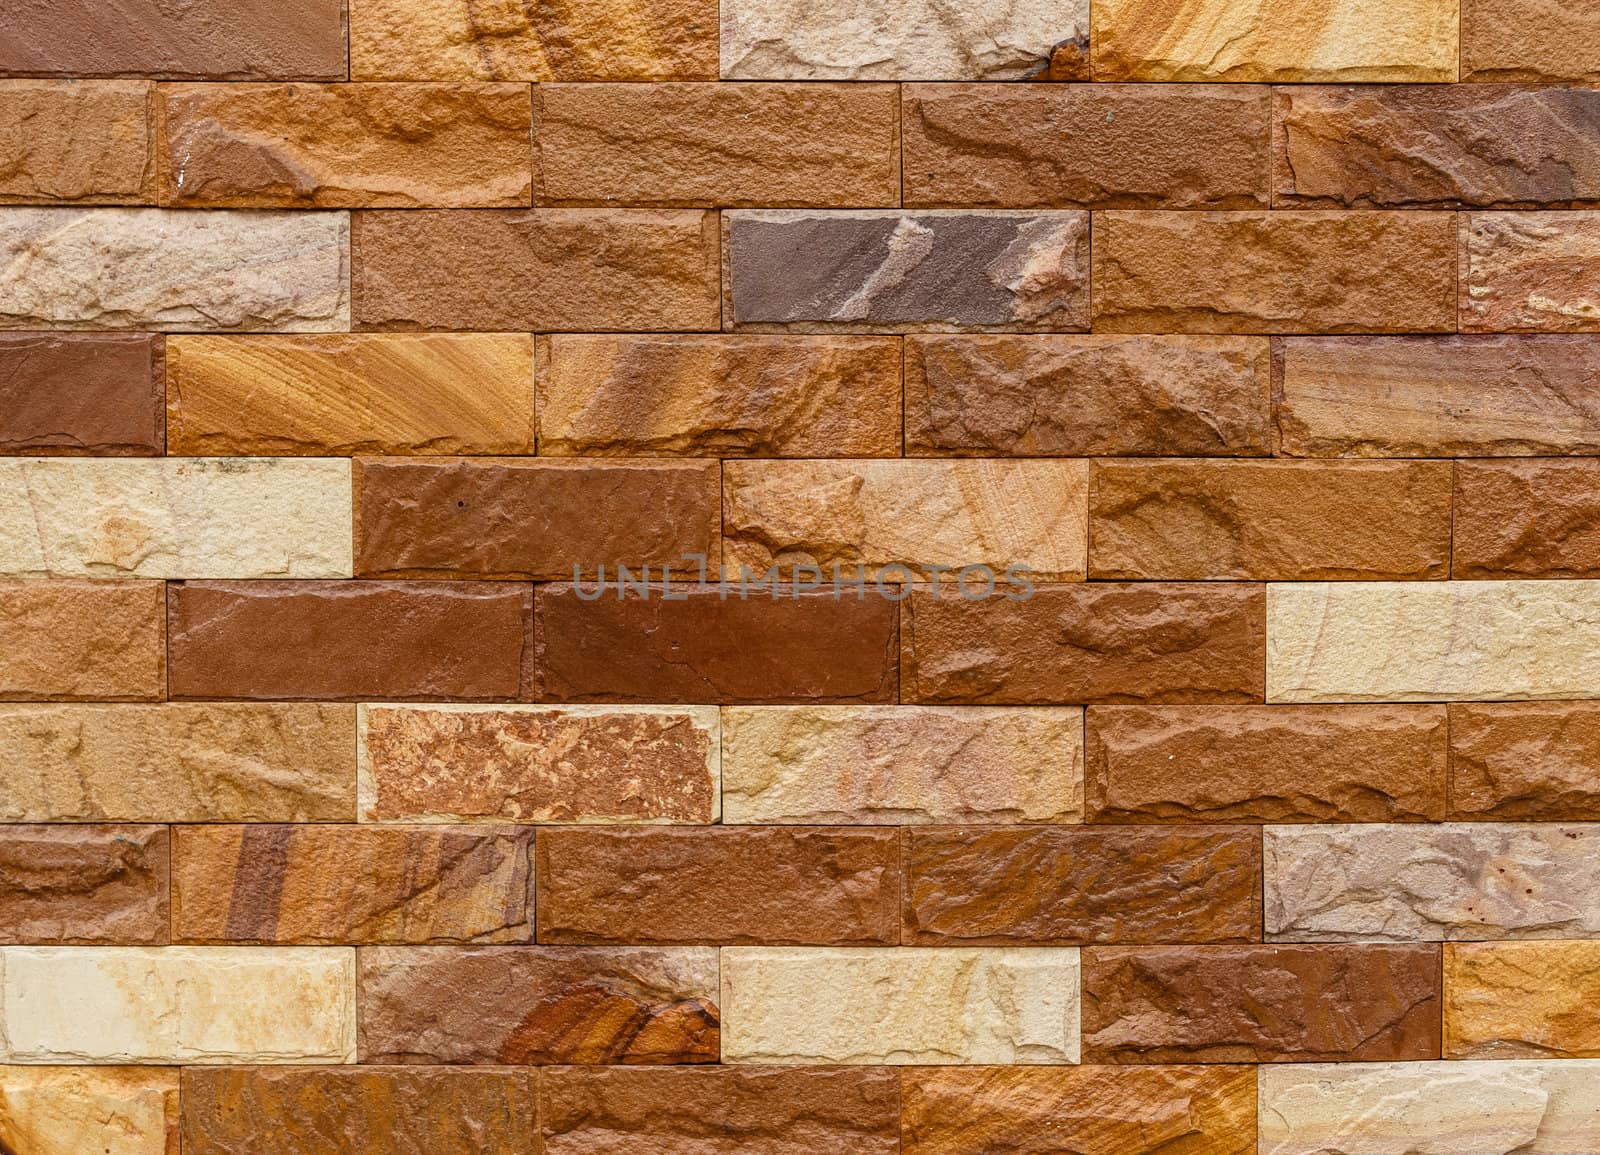 Brown Bricks Wall Pattern, Closeup, Showing Texture by punpleng